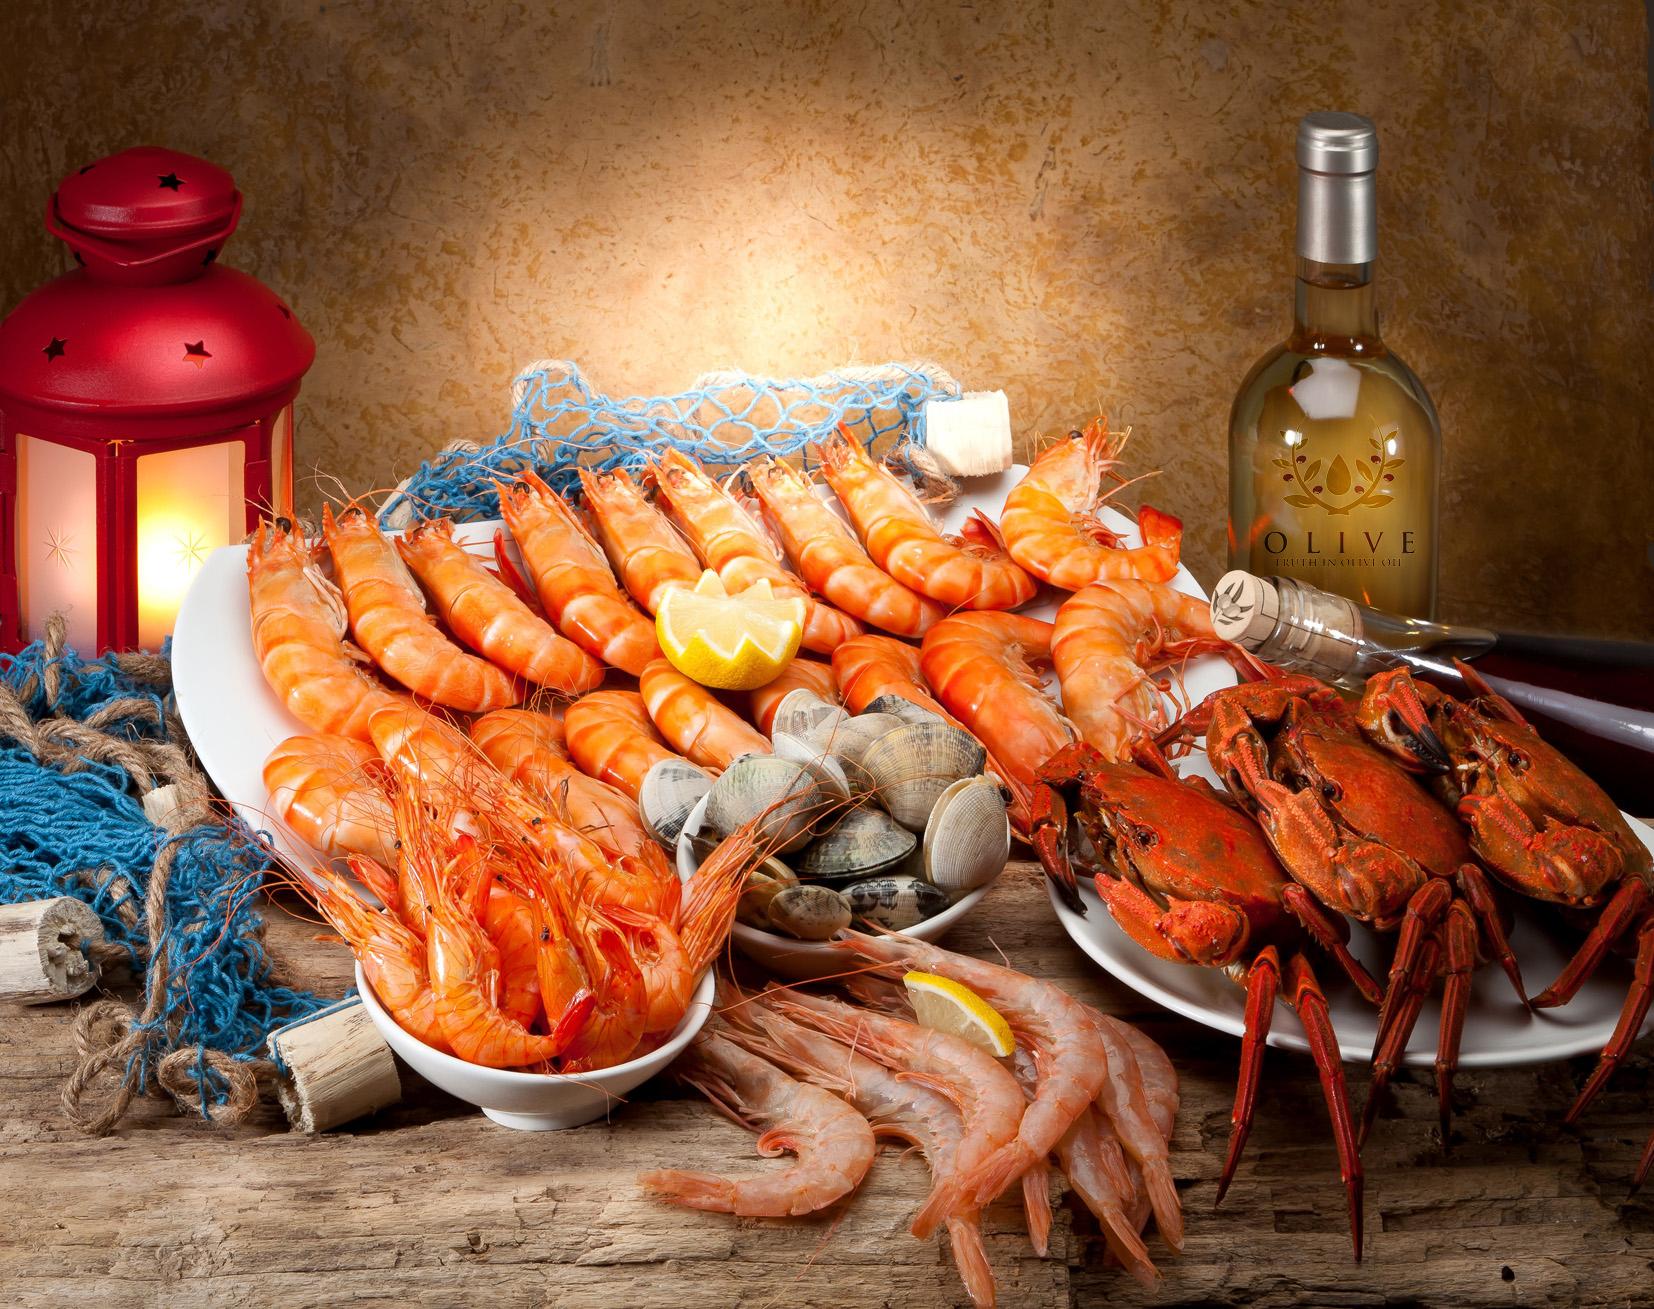 <h2>Frozen Shrimp And Molluscs</h2>
<h2>&nbsp; &nbsp; &nbsp; &nbsp; &nbsp;Enjoy The Best Taste ...</h2>
<p>&nbsp;</p>